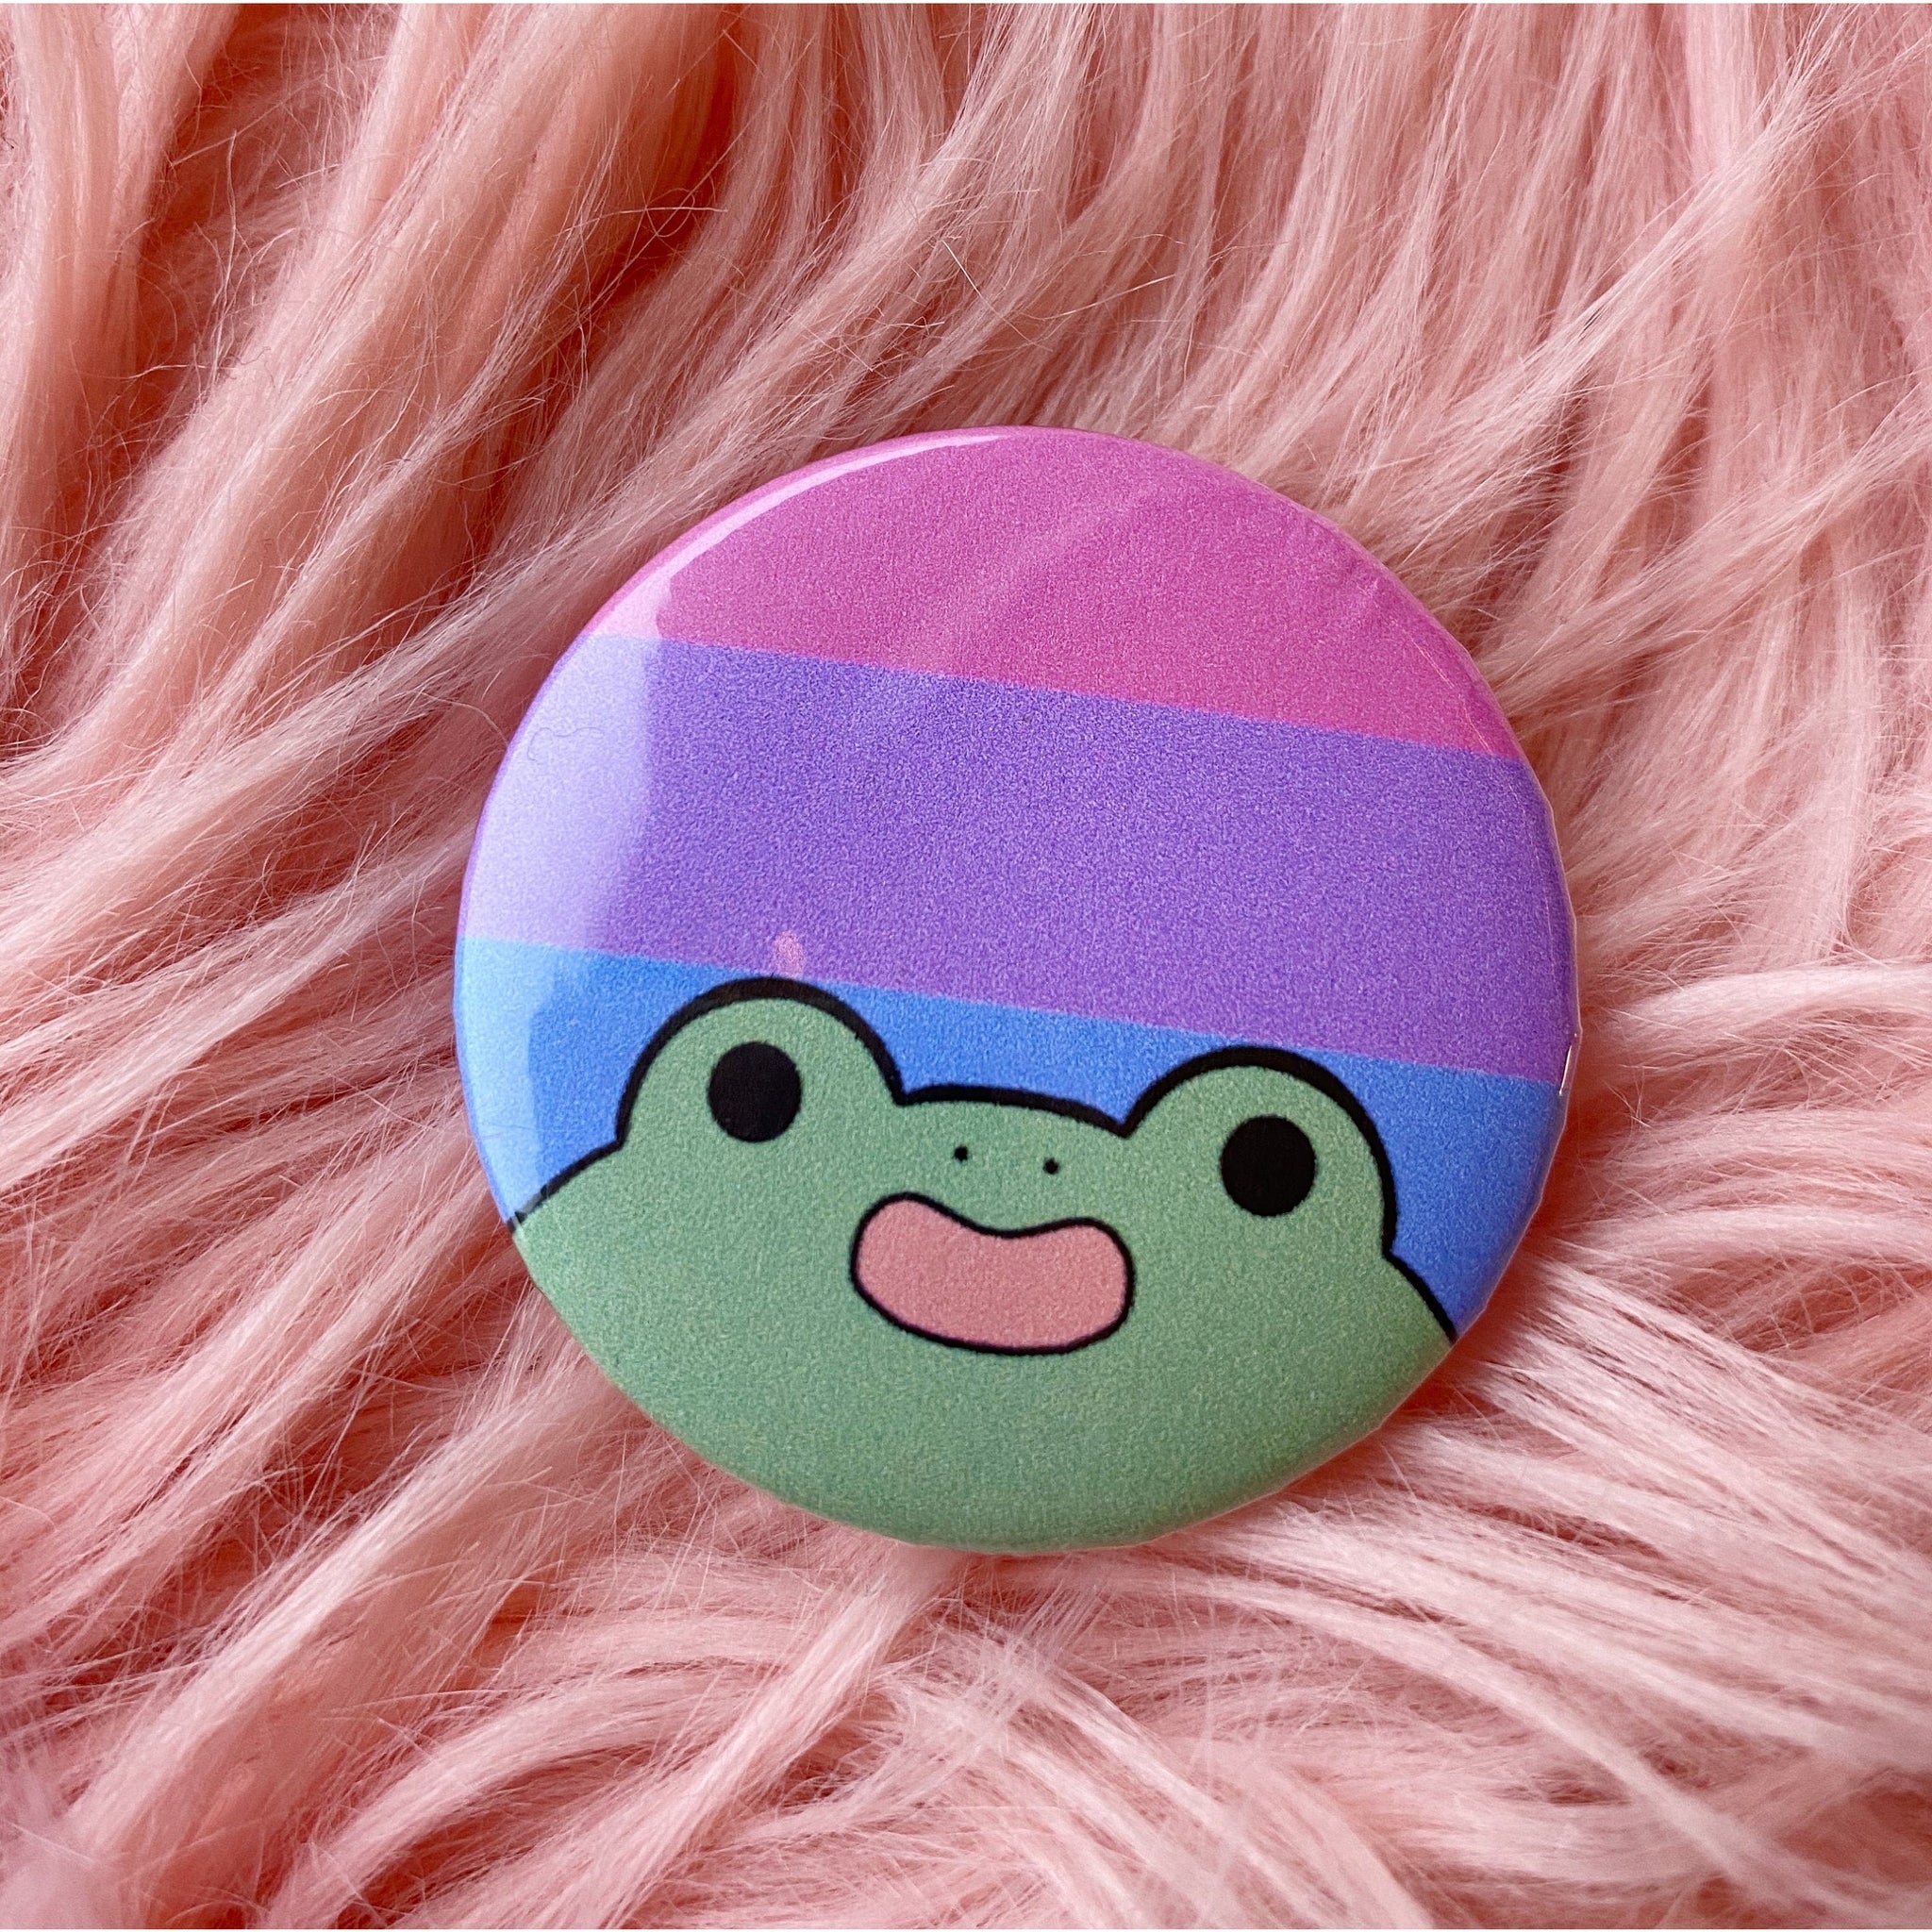 Bisexual Pride Button